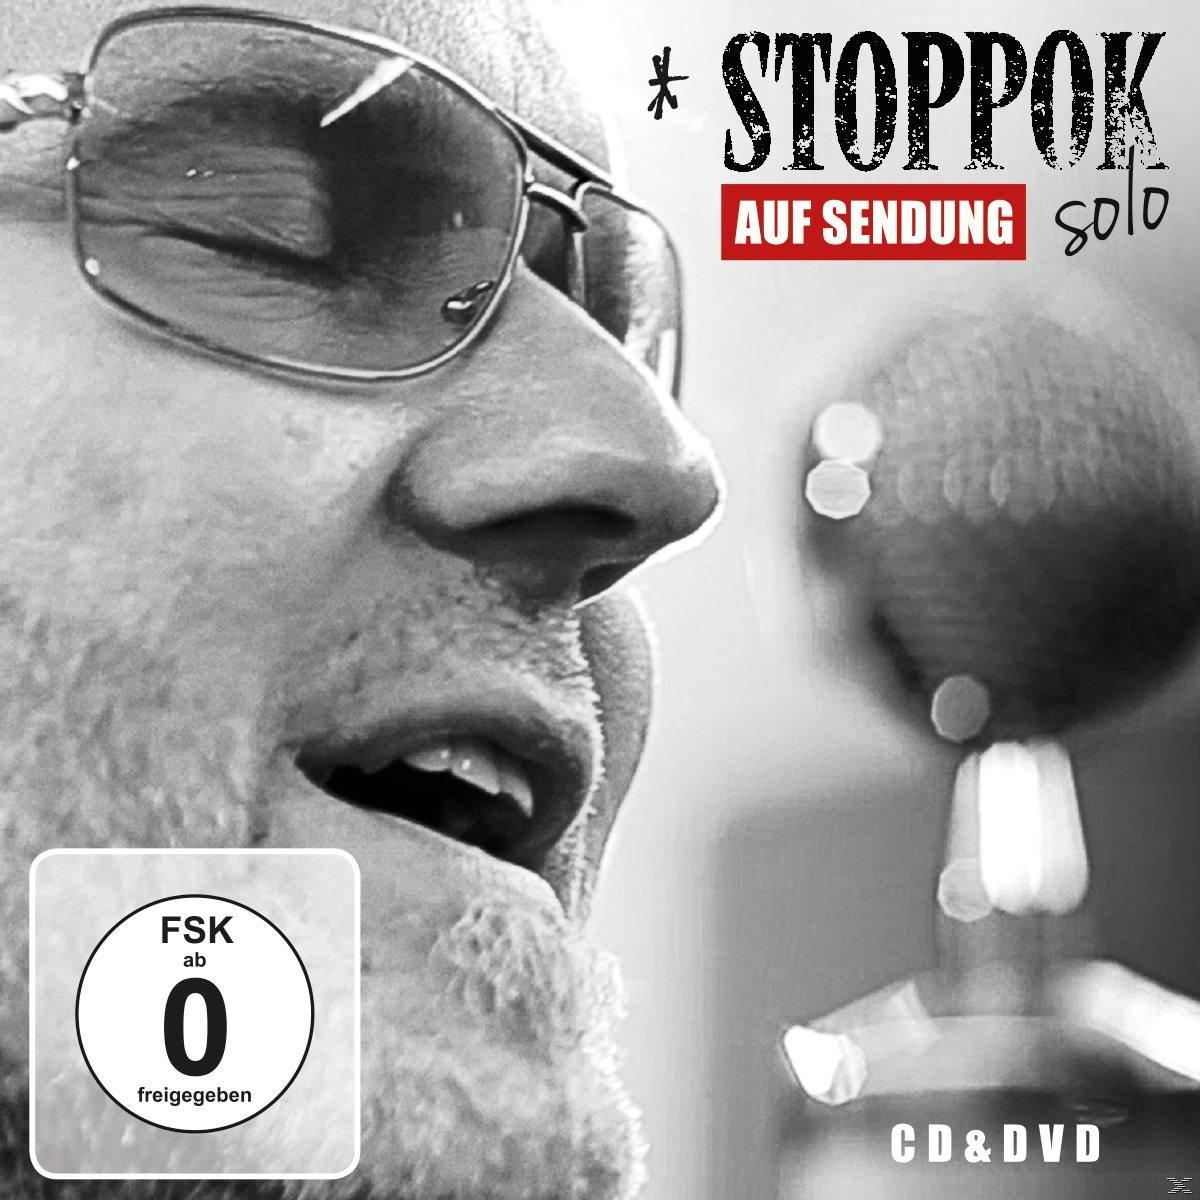 Auf (CD DVD - Video) STOPPOK - + (Solo) Sendung